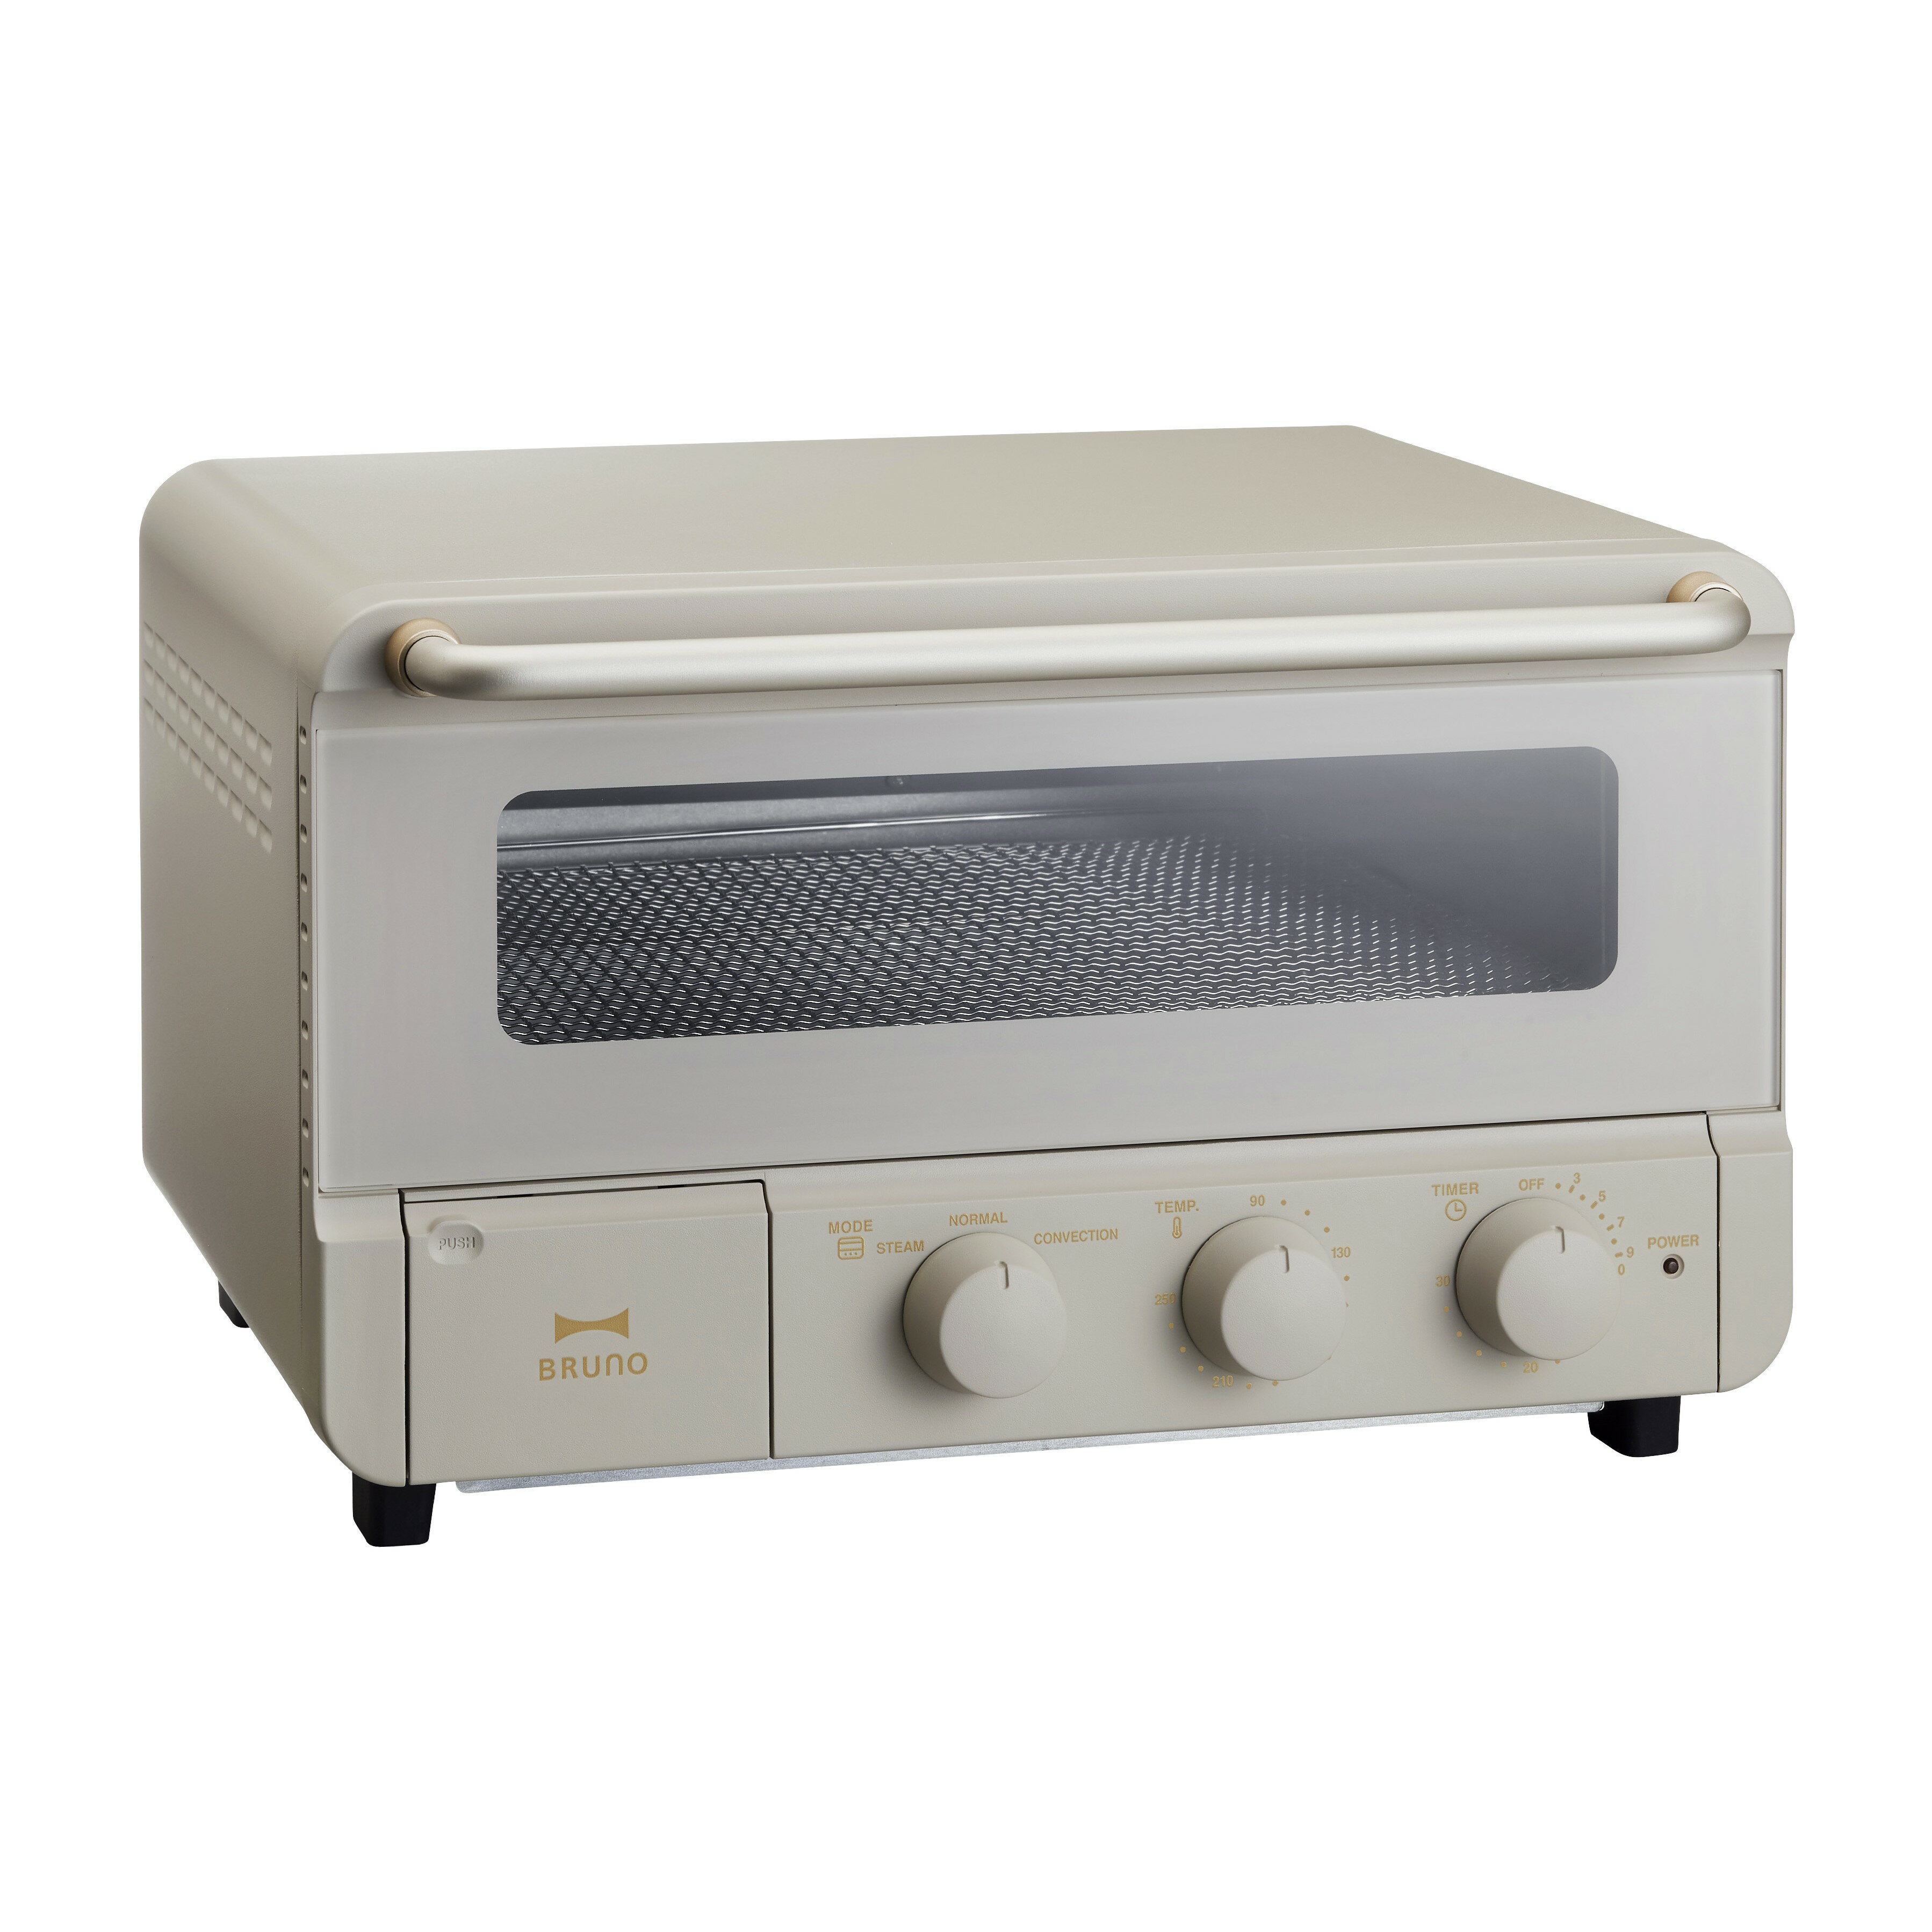 【BRUNO】BOE067 多功能蒸氣烤箱(兩色) 烤麵包機 烤吐司機 旋風烤箱 多功能烤箱 瞬熱均勻 原廠公司貨